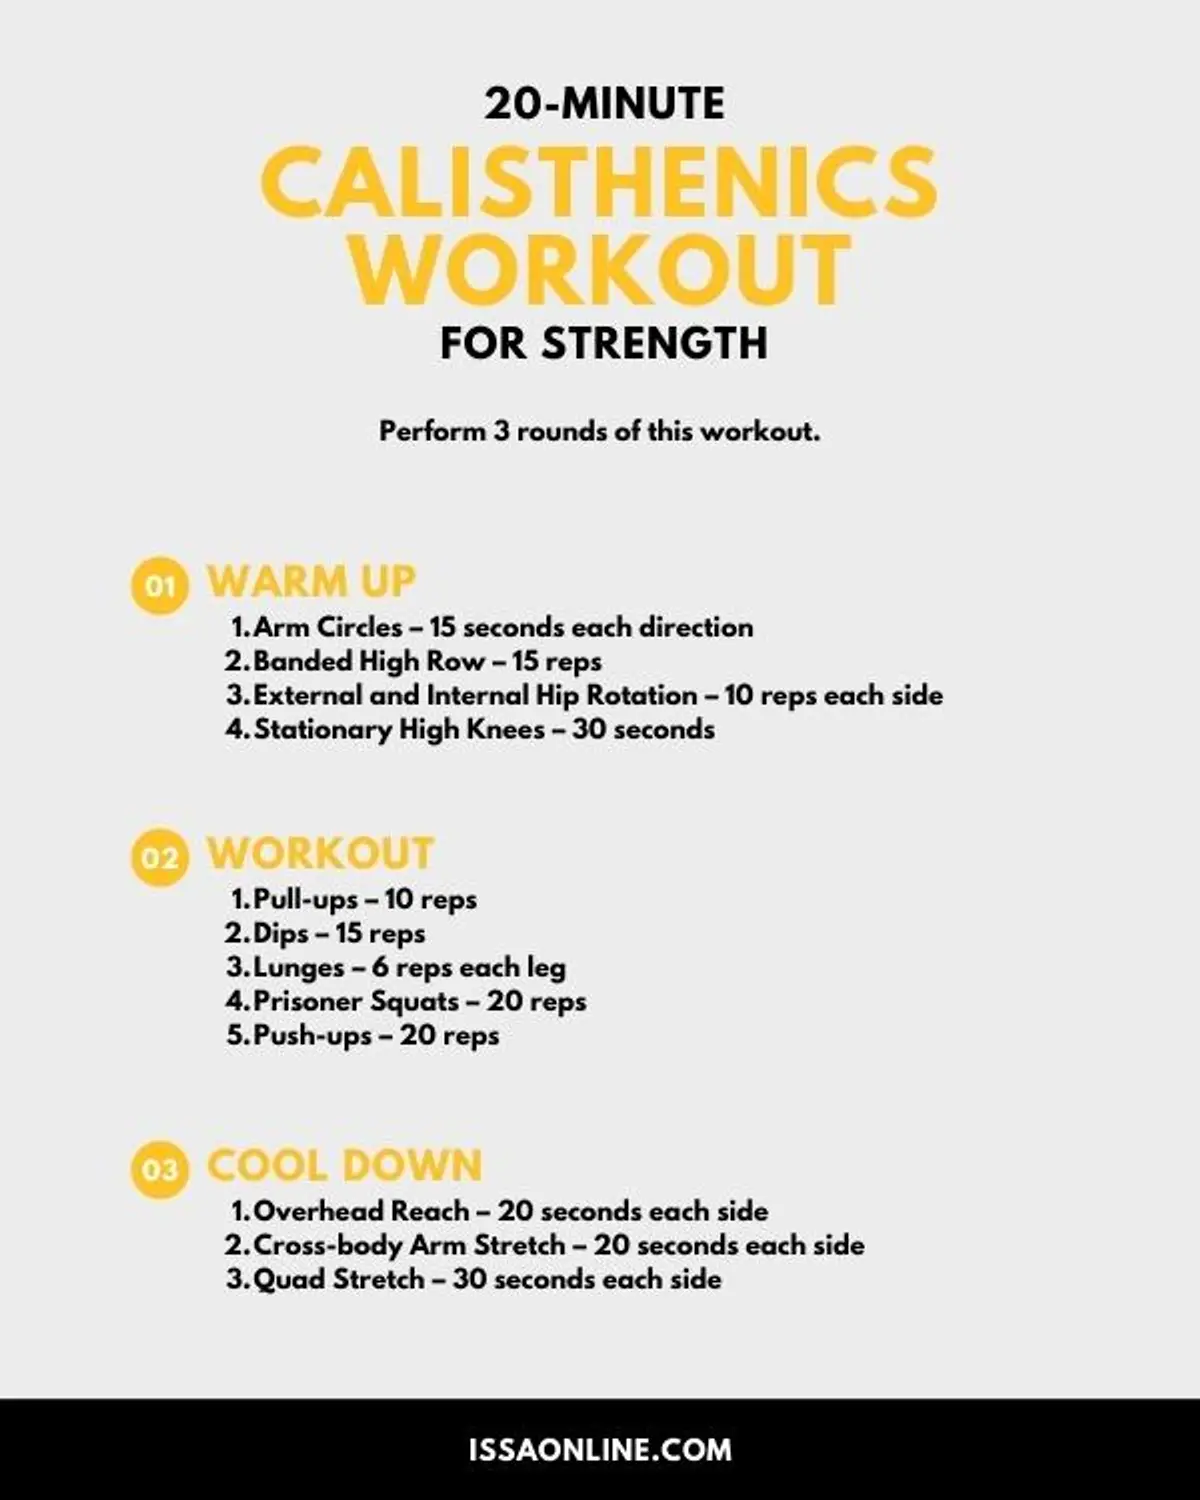 11 Calisthenics Exercises For Beginners To Strengthen Muscles